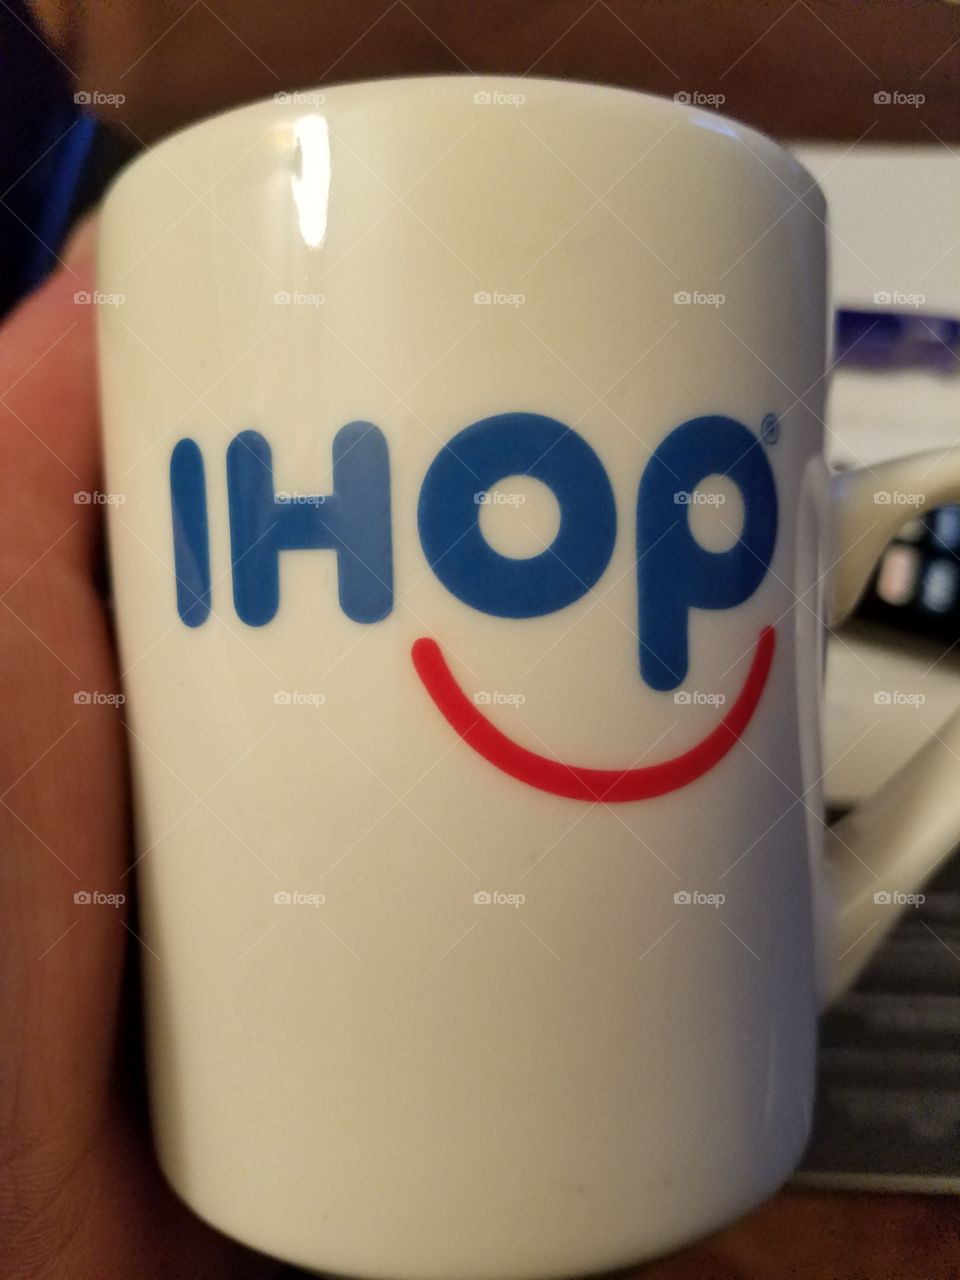 The Ihop mug is smiling at me!